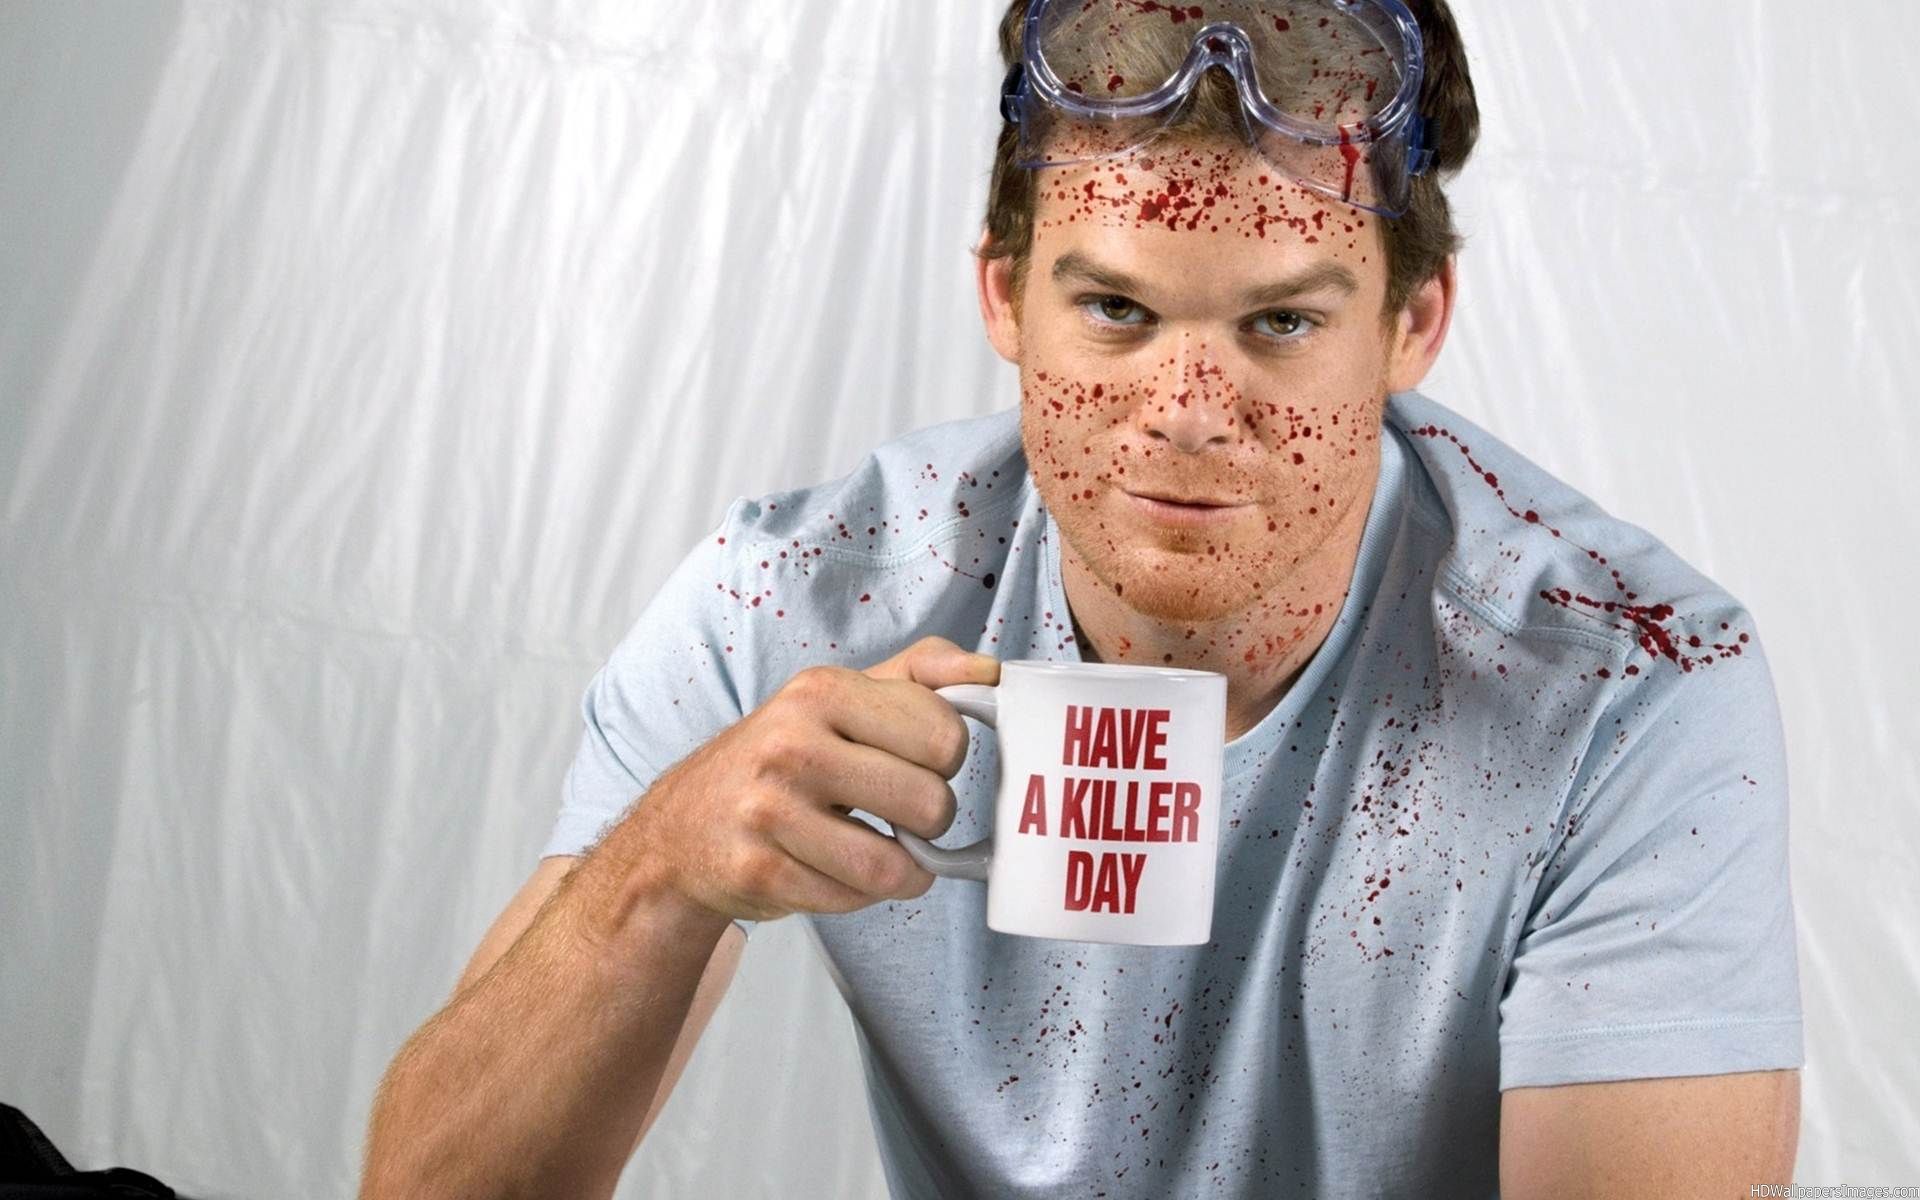 Dexter: New Blood: Season 1 - TV on Google Play